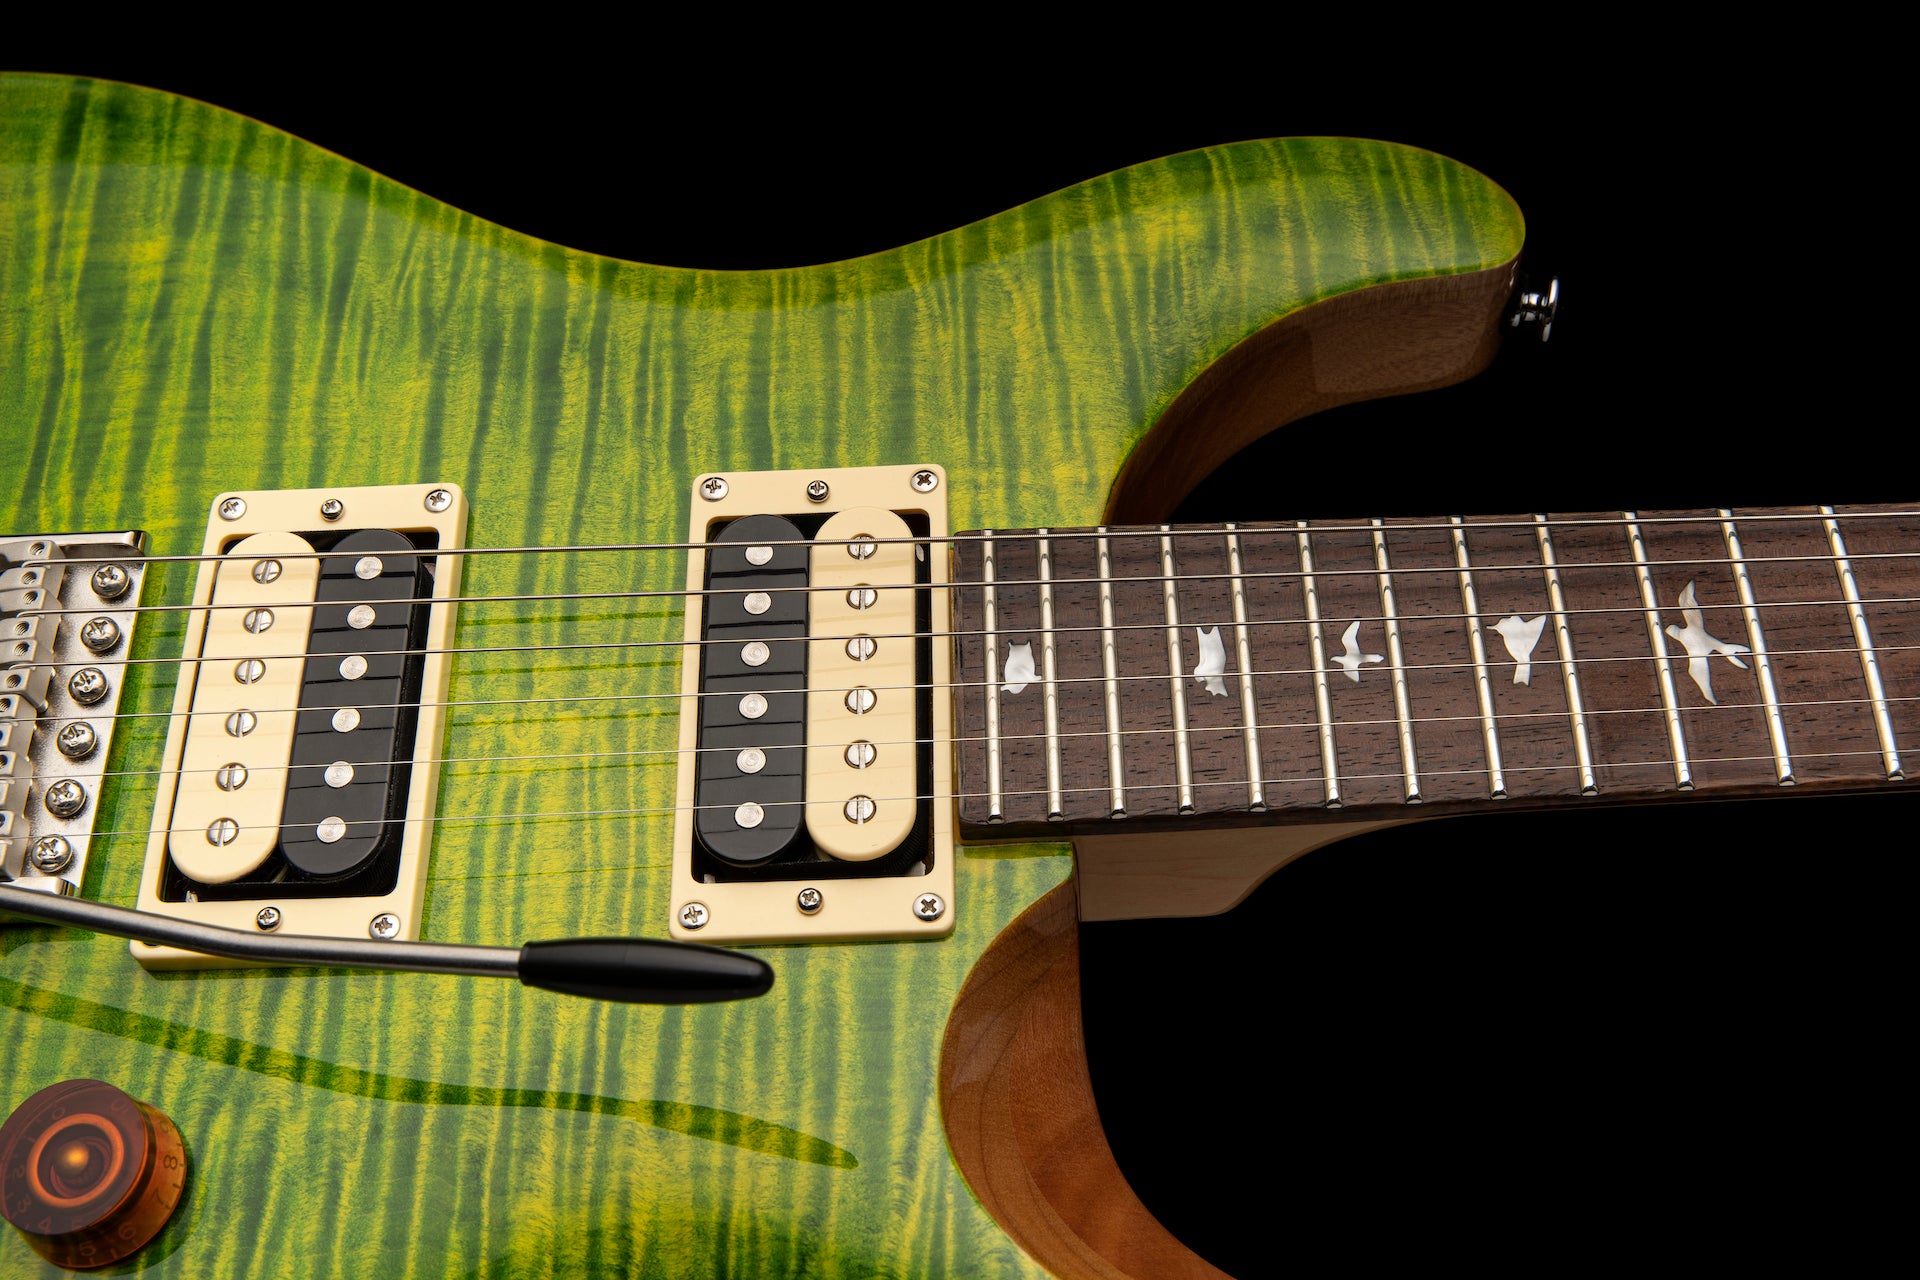 PRS SE Custom 24-08 Electric Guitar - Eriza Verde - HIENDGUITAR   PRS SE 